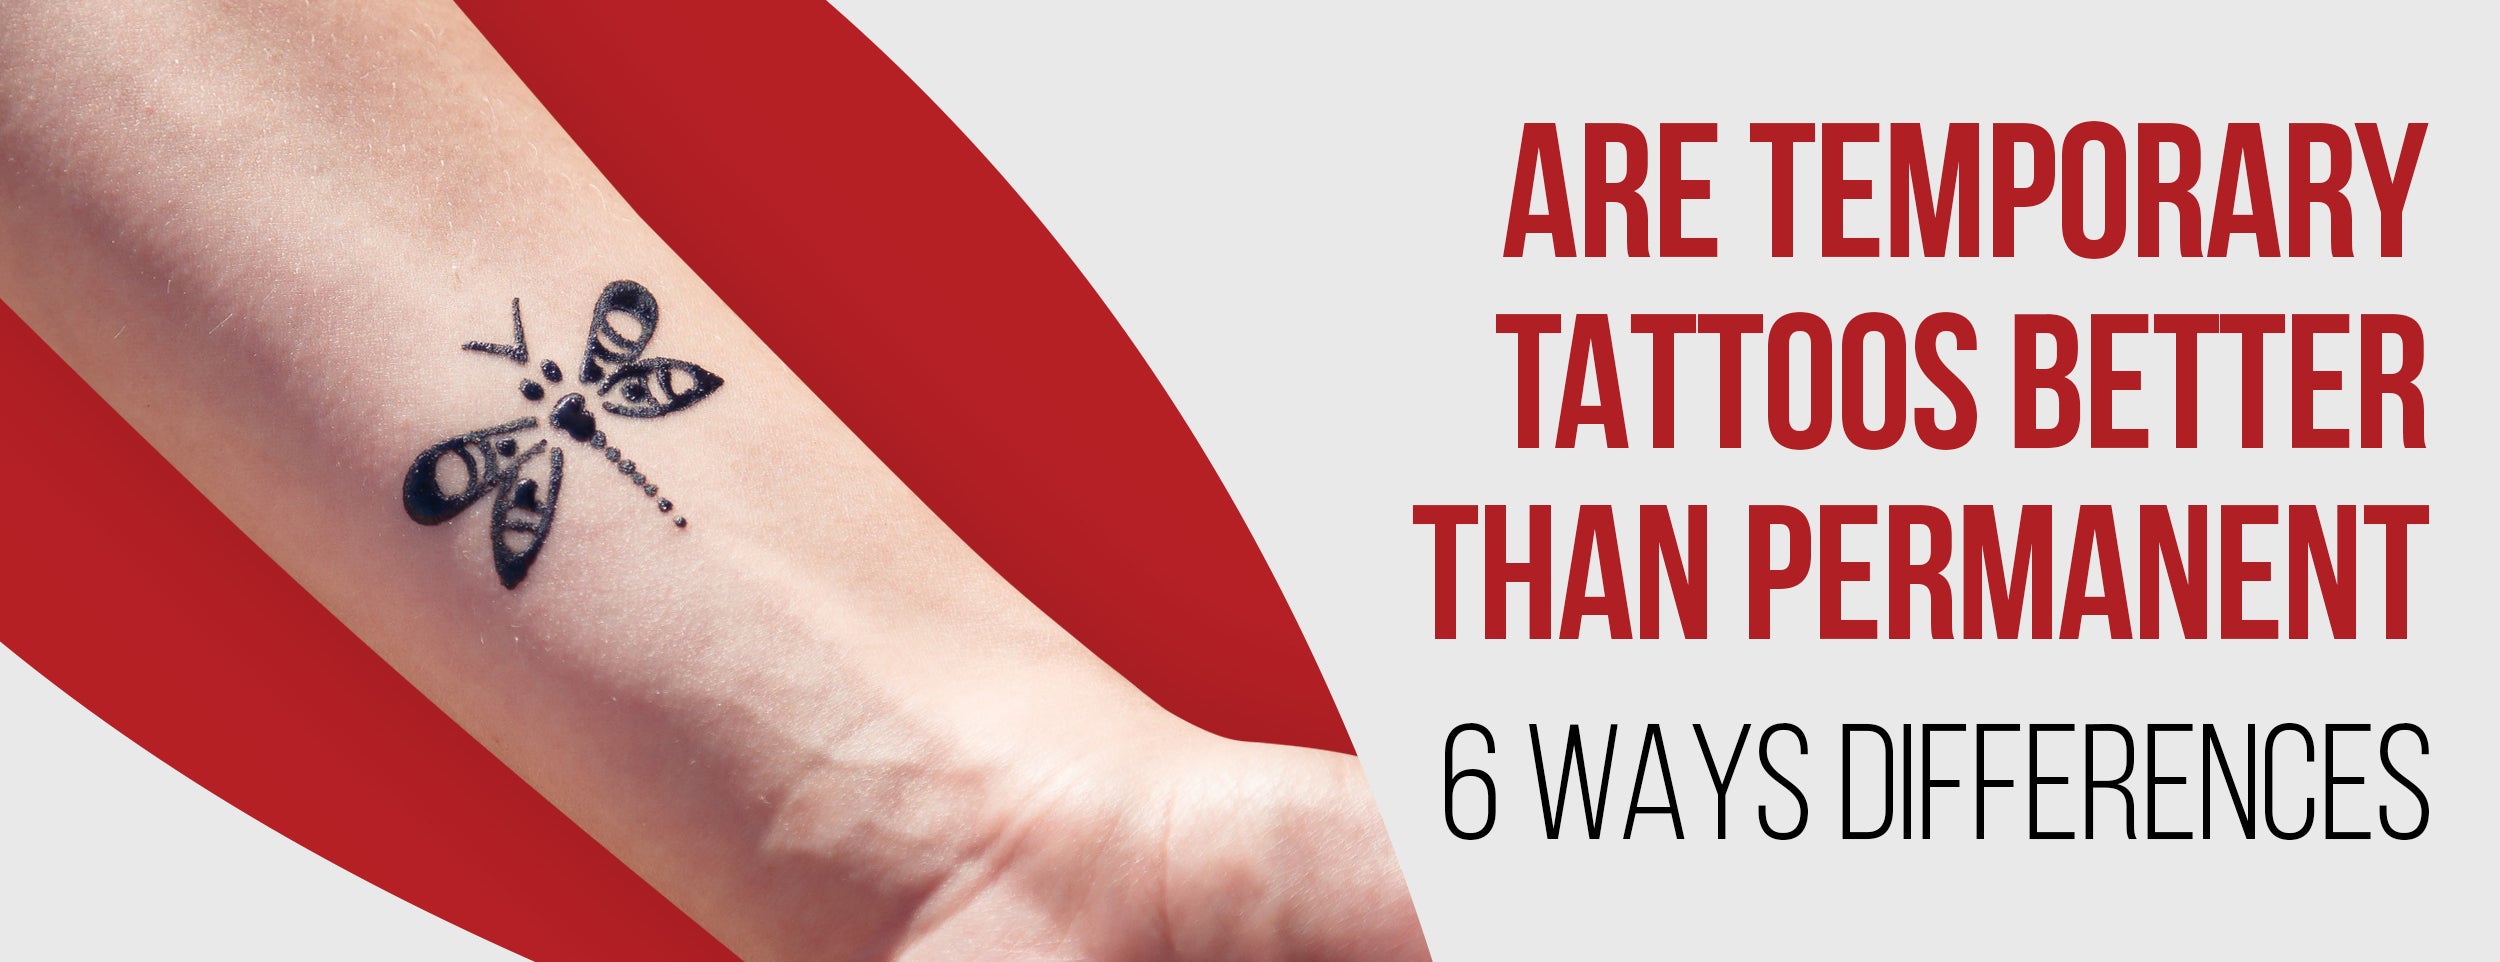 Medifee Blog | Removing Tattoo from Skin - Laser Treatment Method - Medifee  Blog